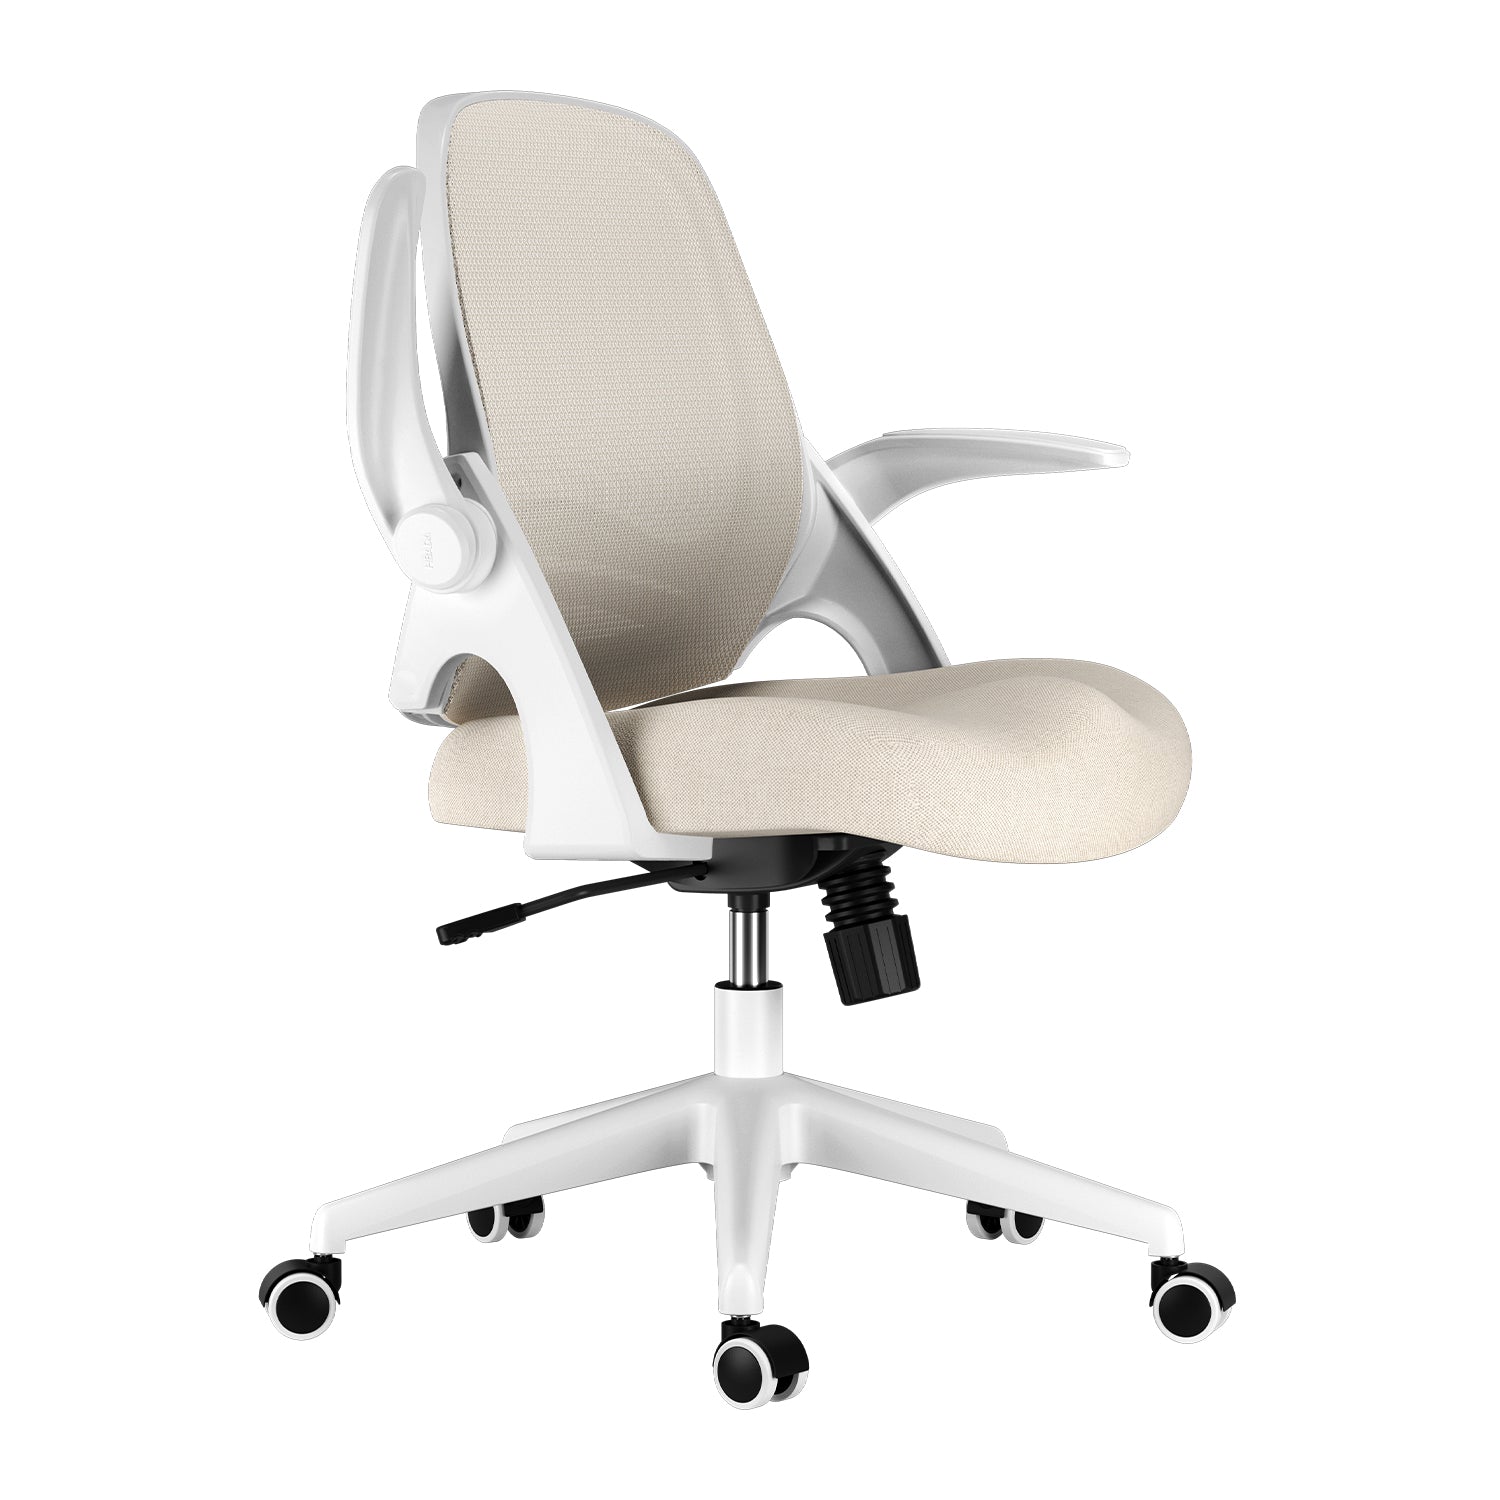 HBADA Office Chair,Gray